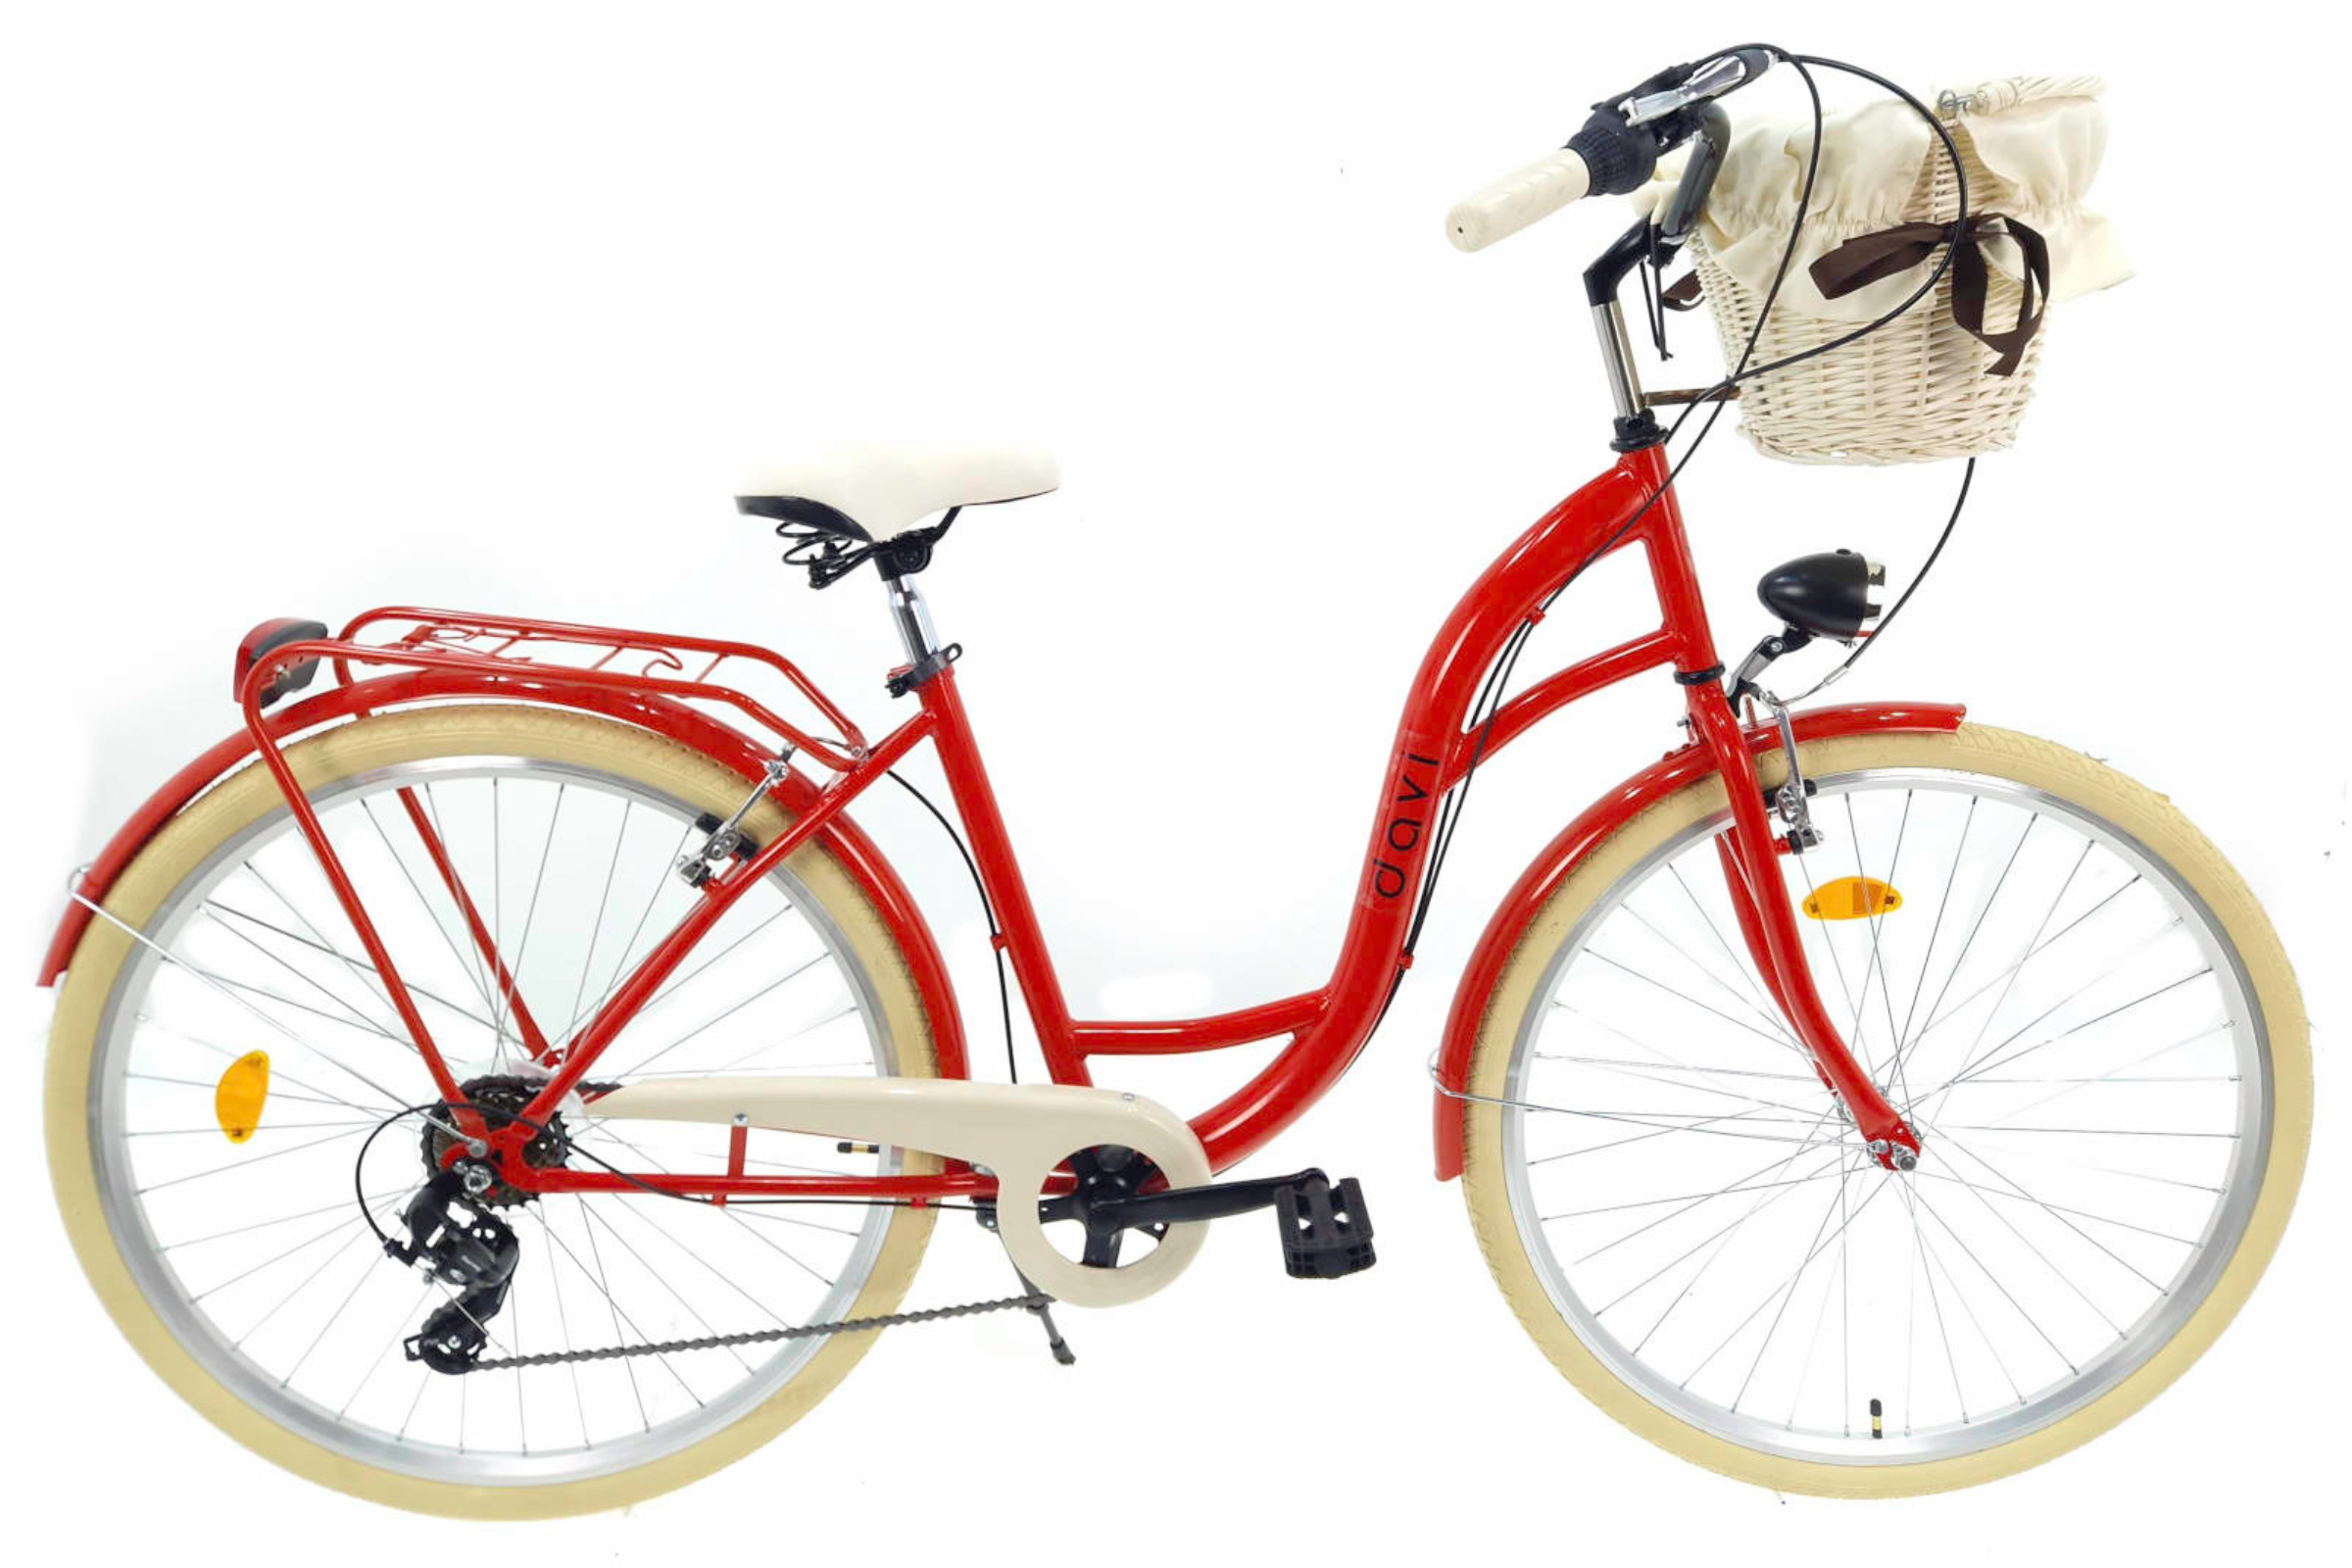 Дамски велосипед Davi Emma, 7-скоростен Shimano,160-185 cm височина, колела 28″, червен